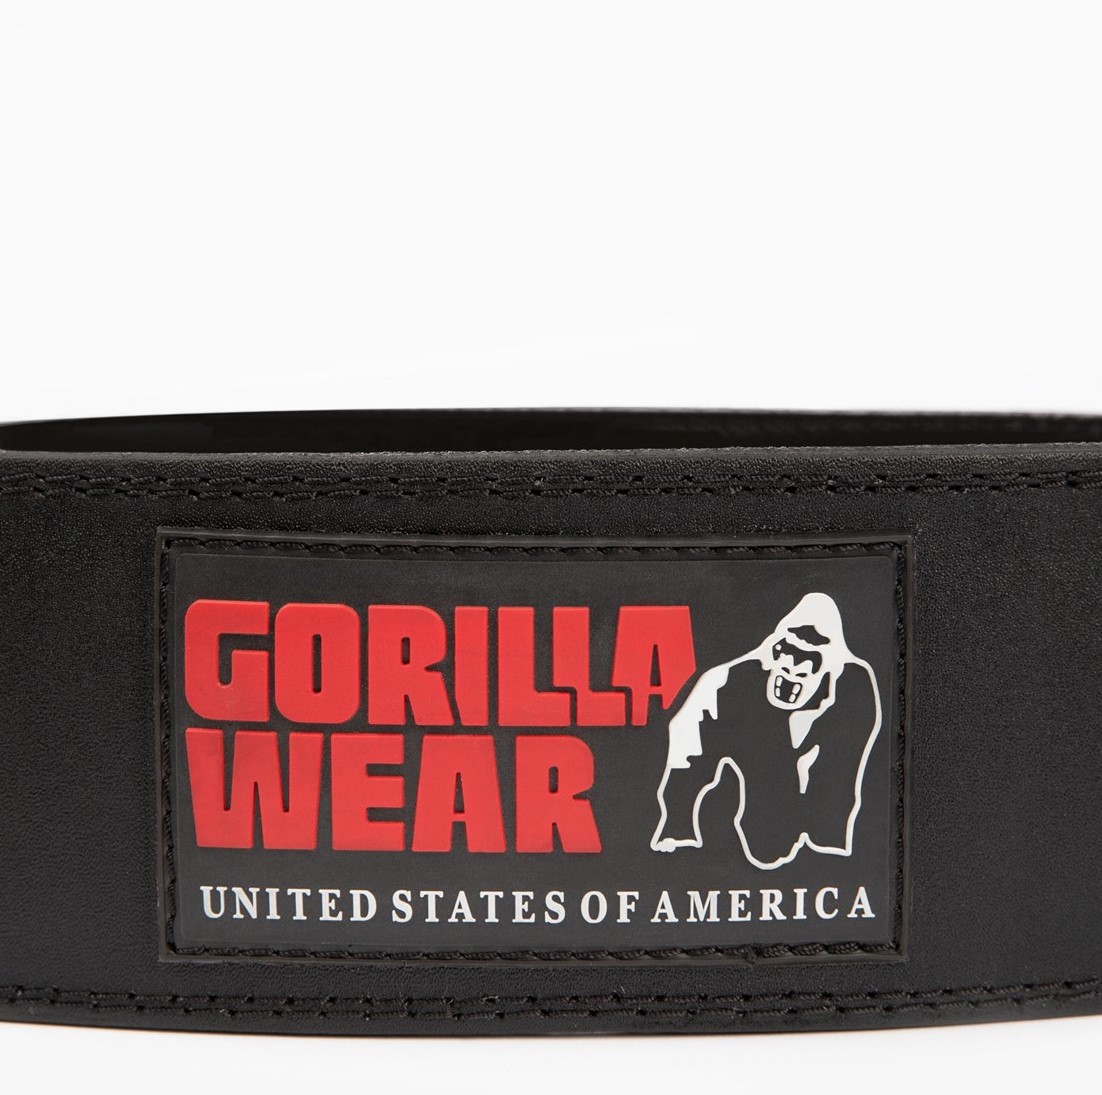 Gorilla Wear 4 Inch Padded Leather Lifting Belt - Black/Red - L/XL